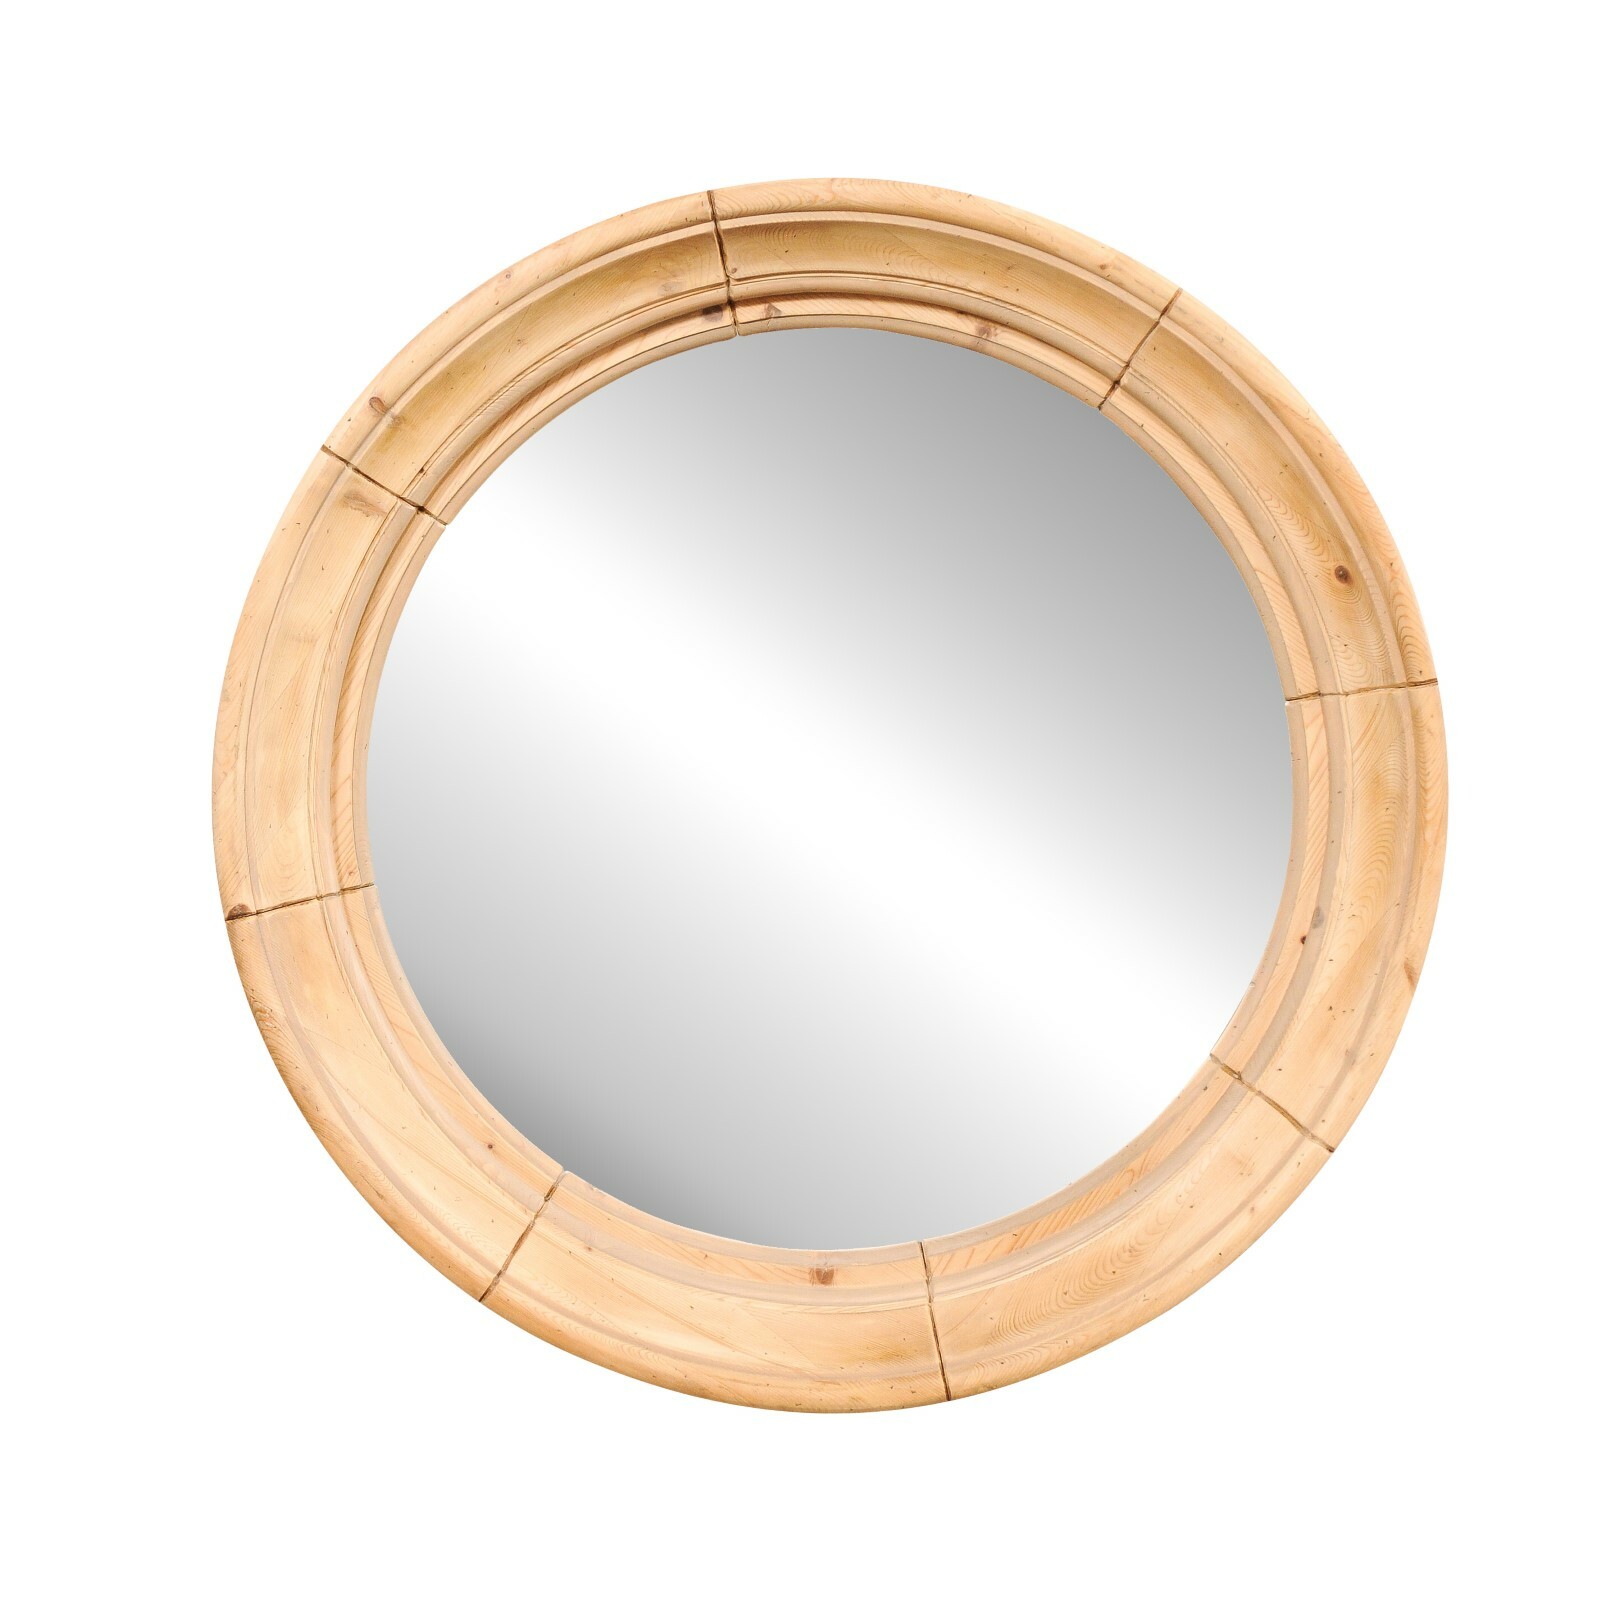 English Round-Shaped Mirror w/Nice Depth